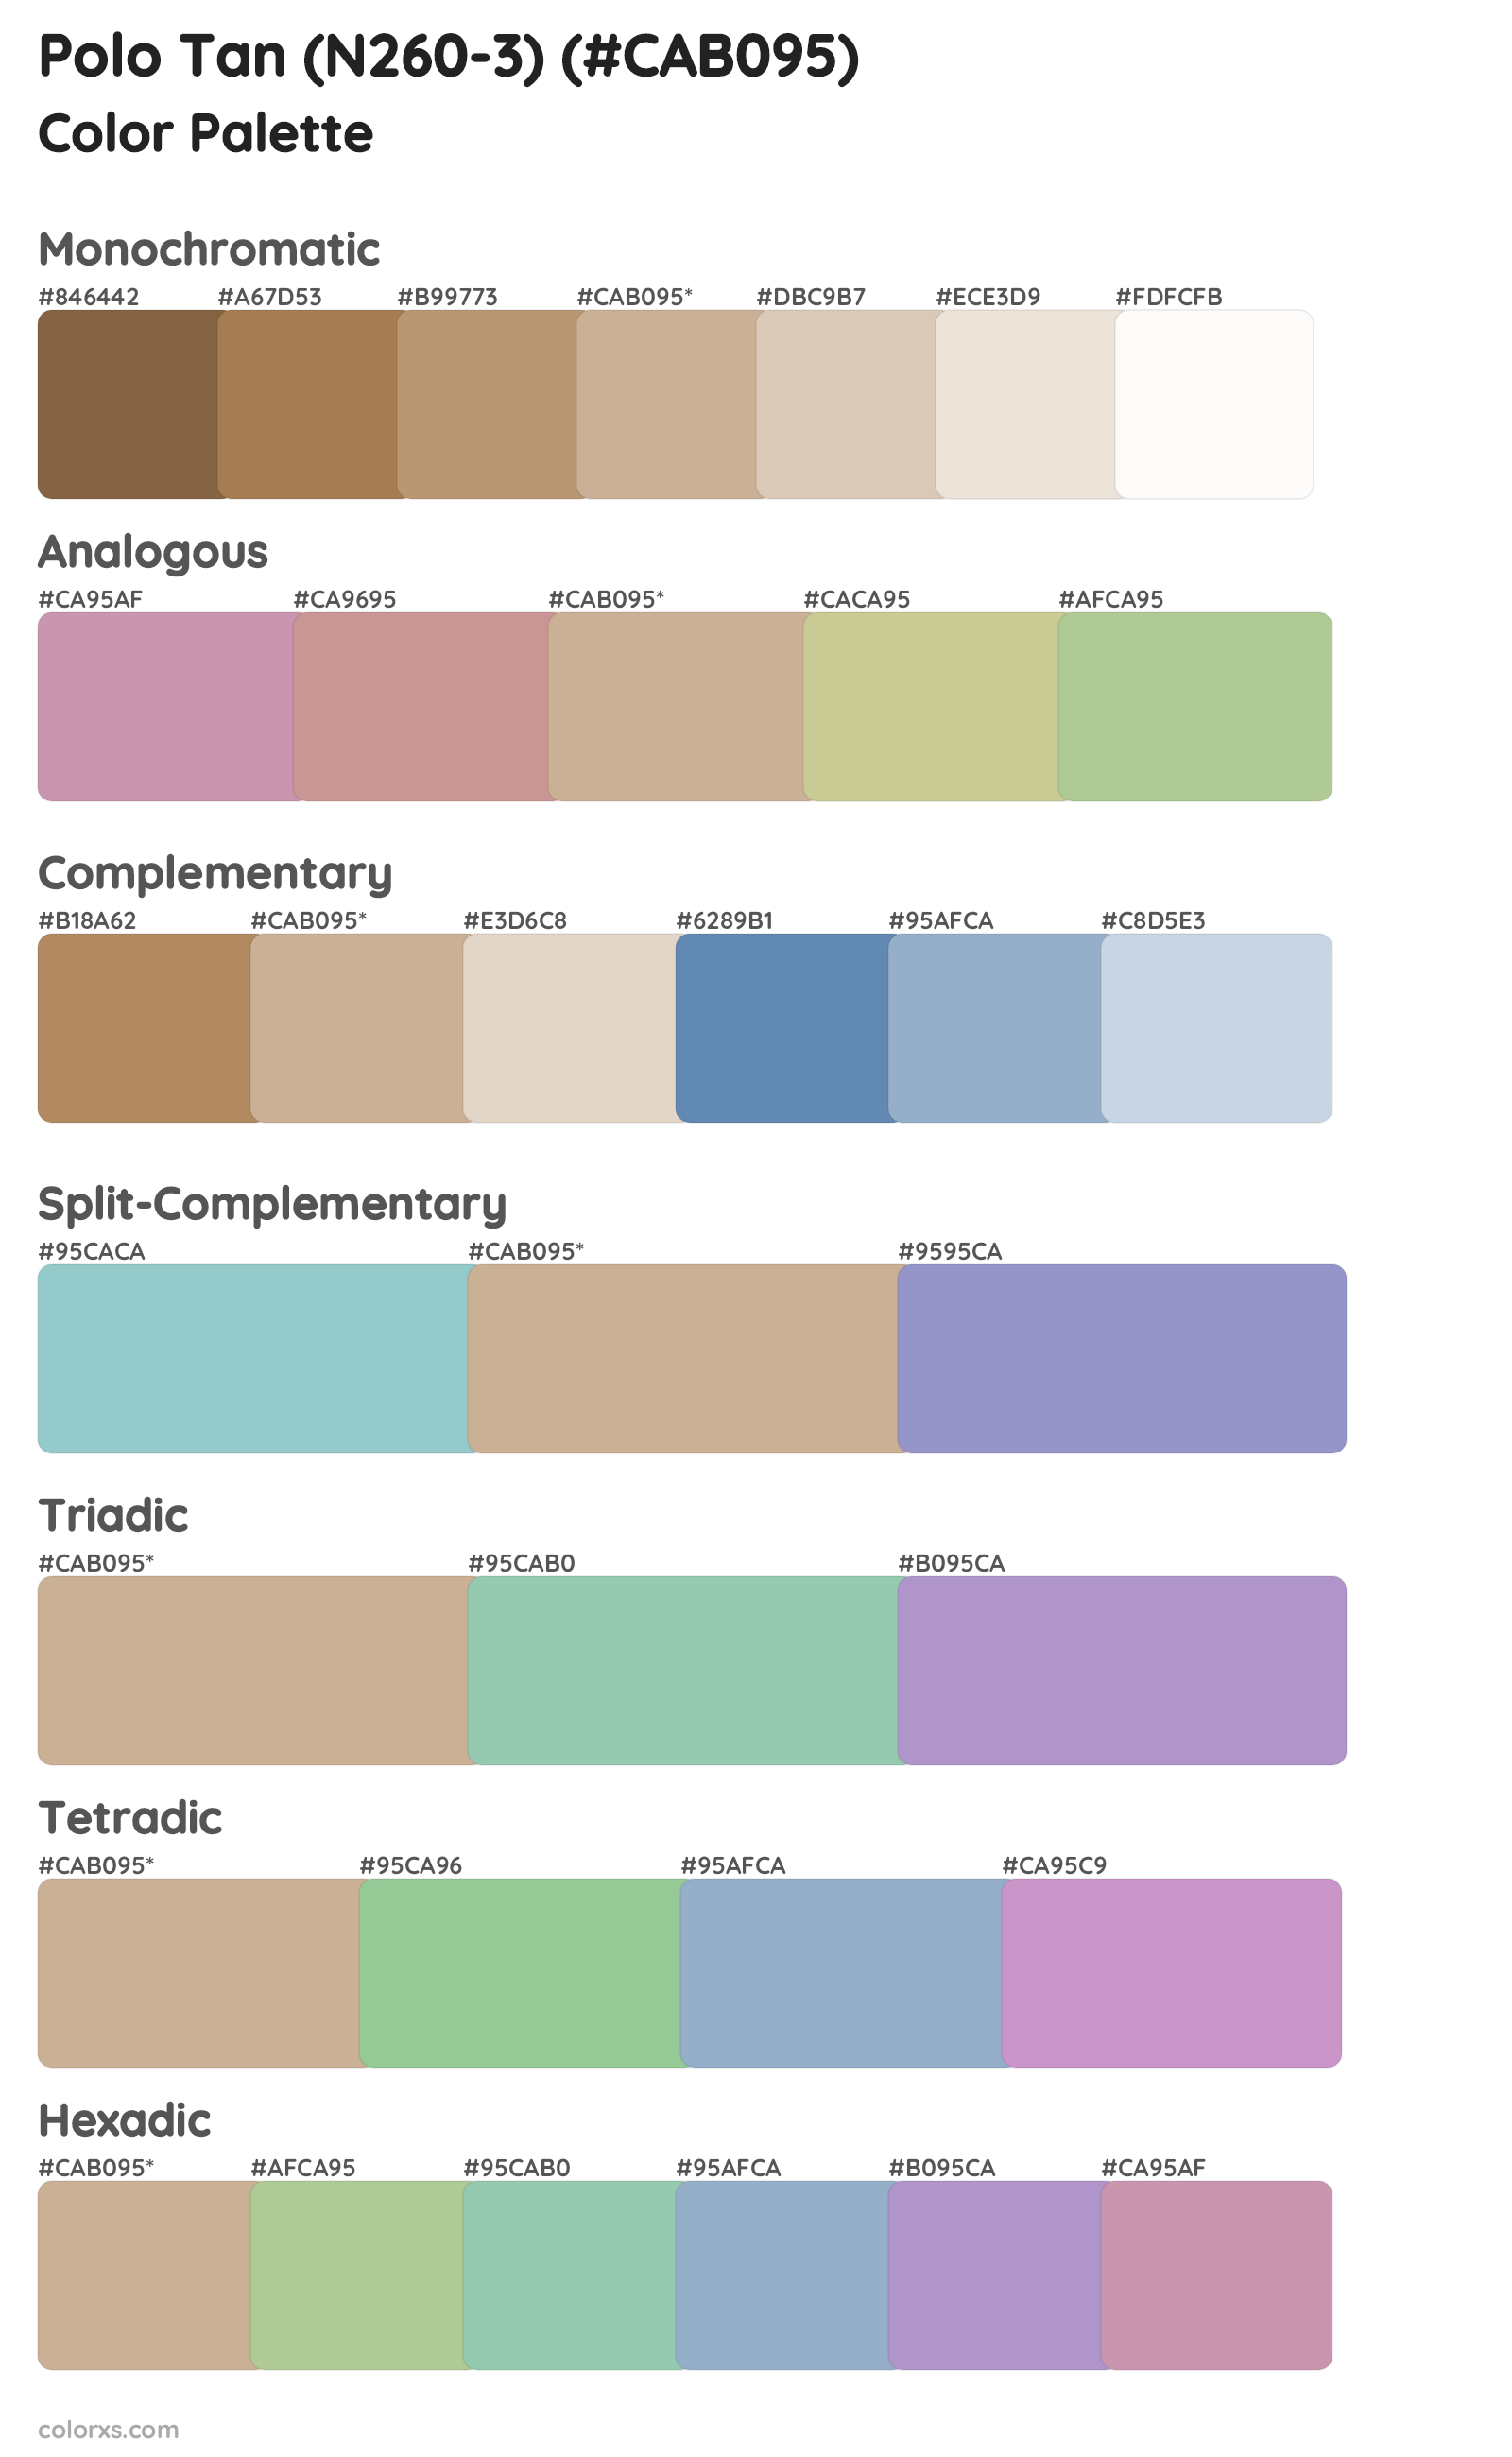 Polo Tan (N260-3) Color Scheme Palettes